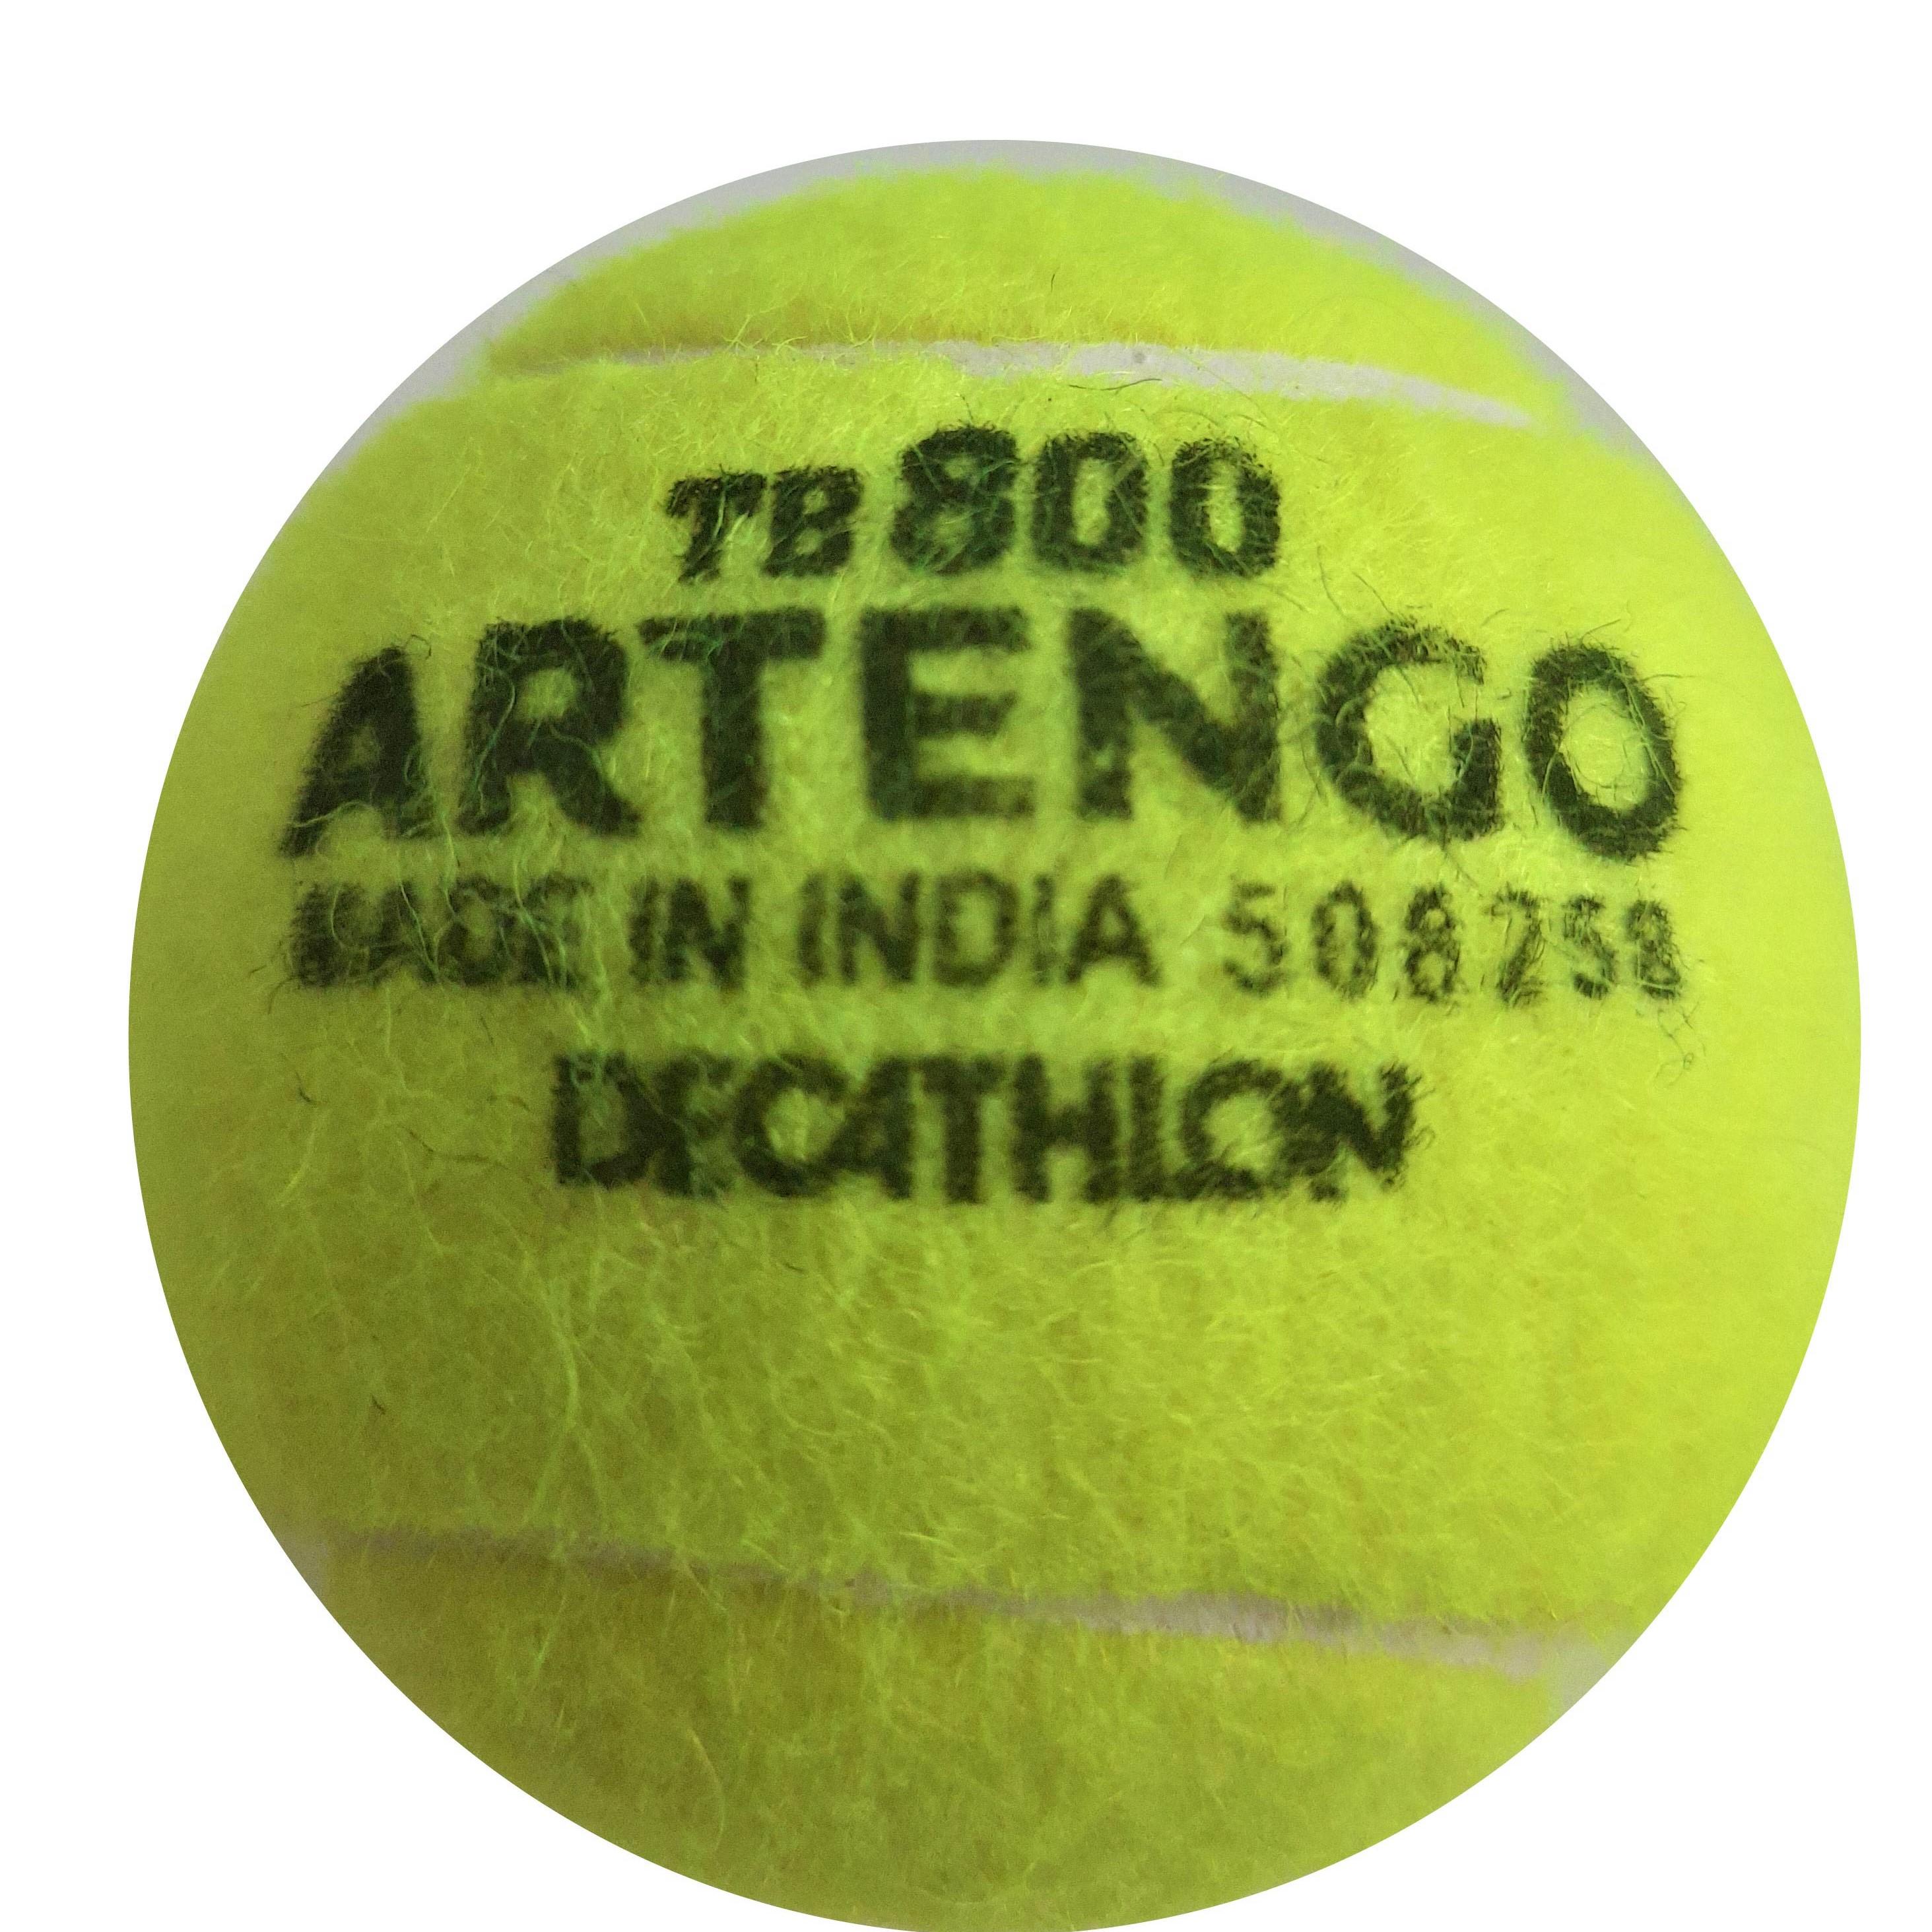 tennis ball decathlon